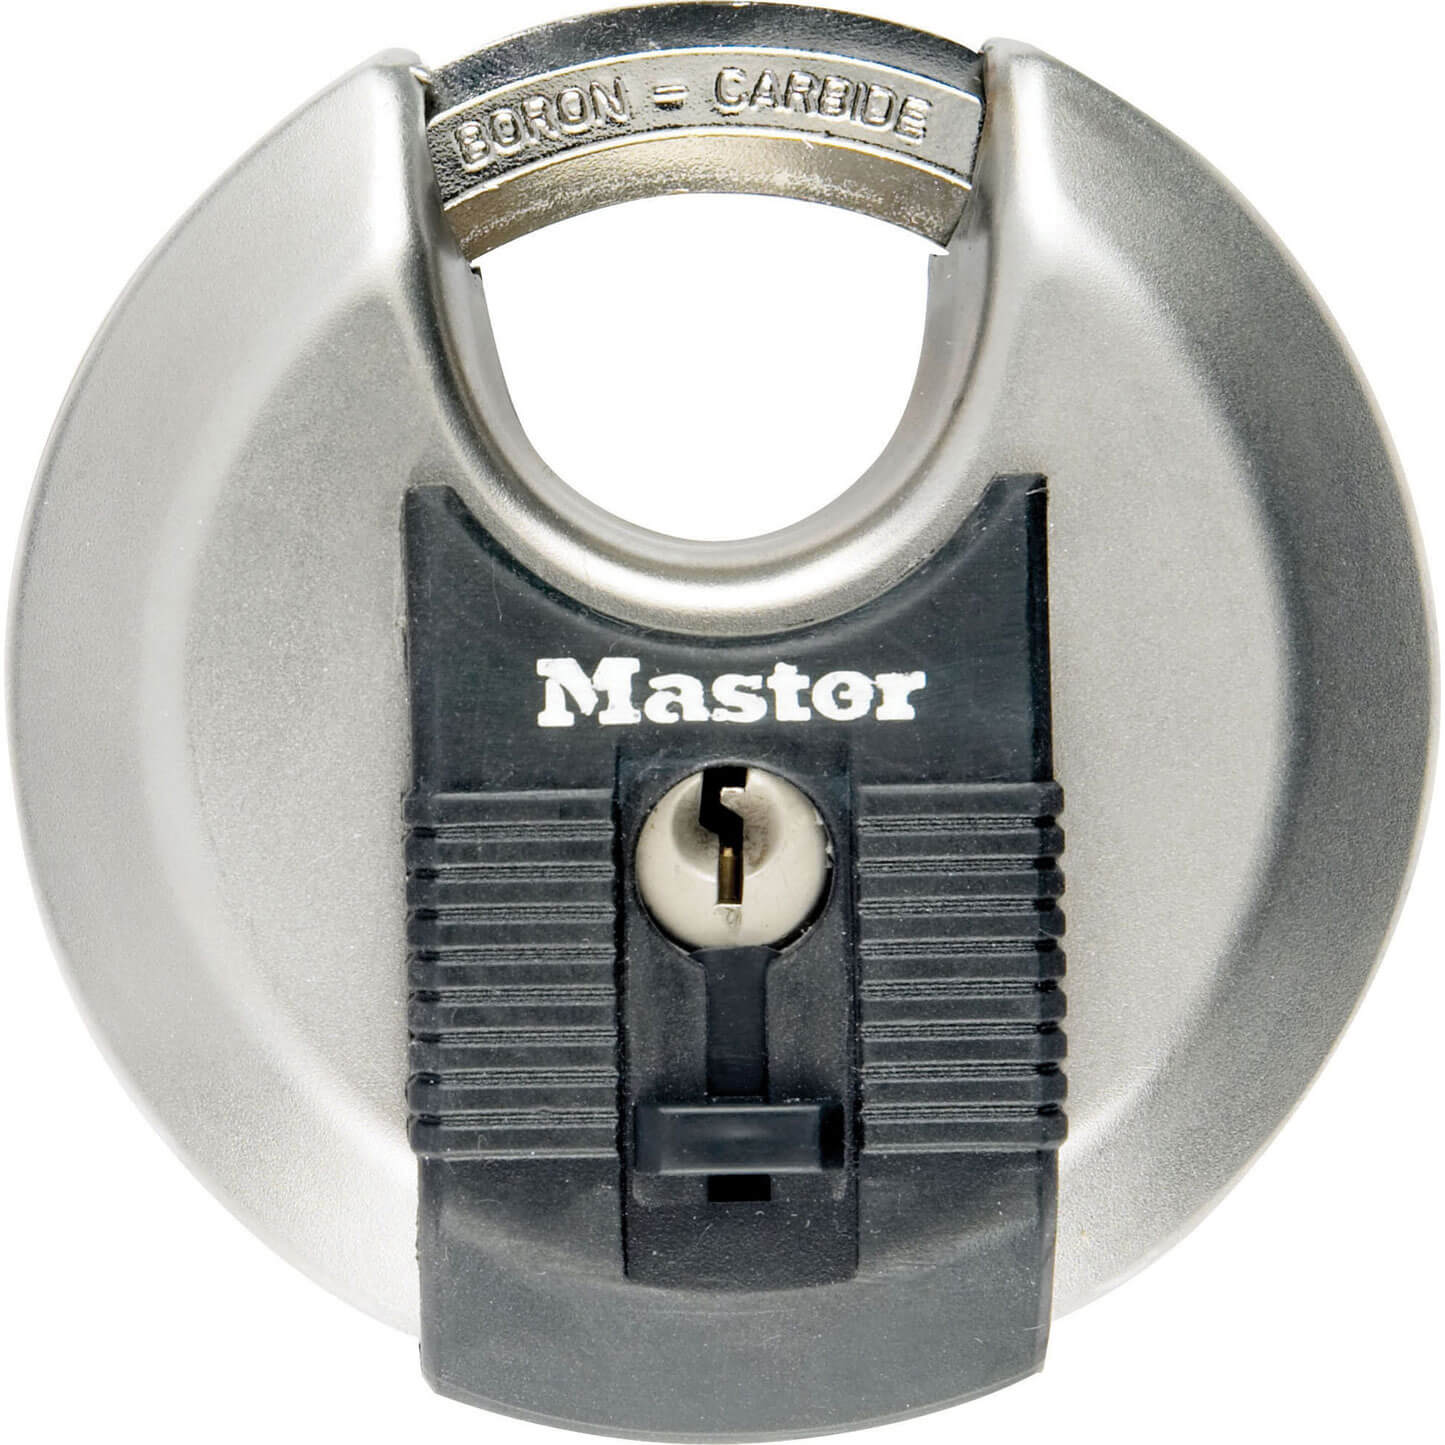 Masterlock Excell Stainless Steel Discus Padlock 70mm Standard